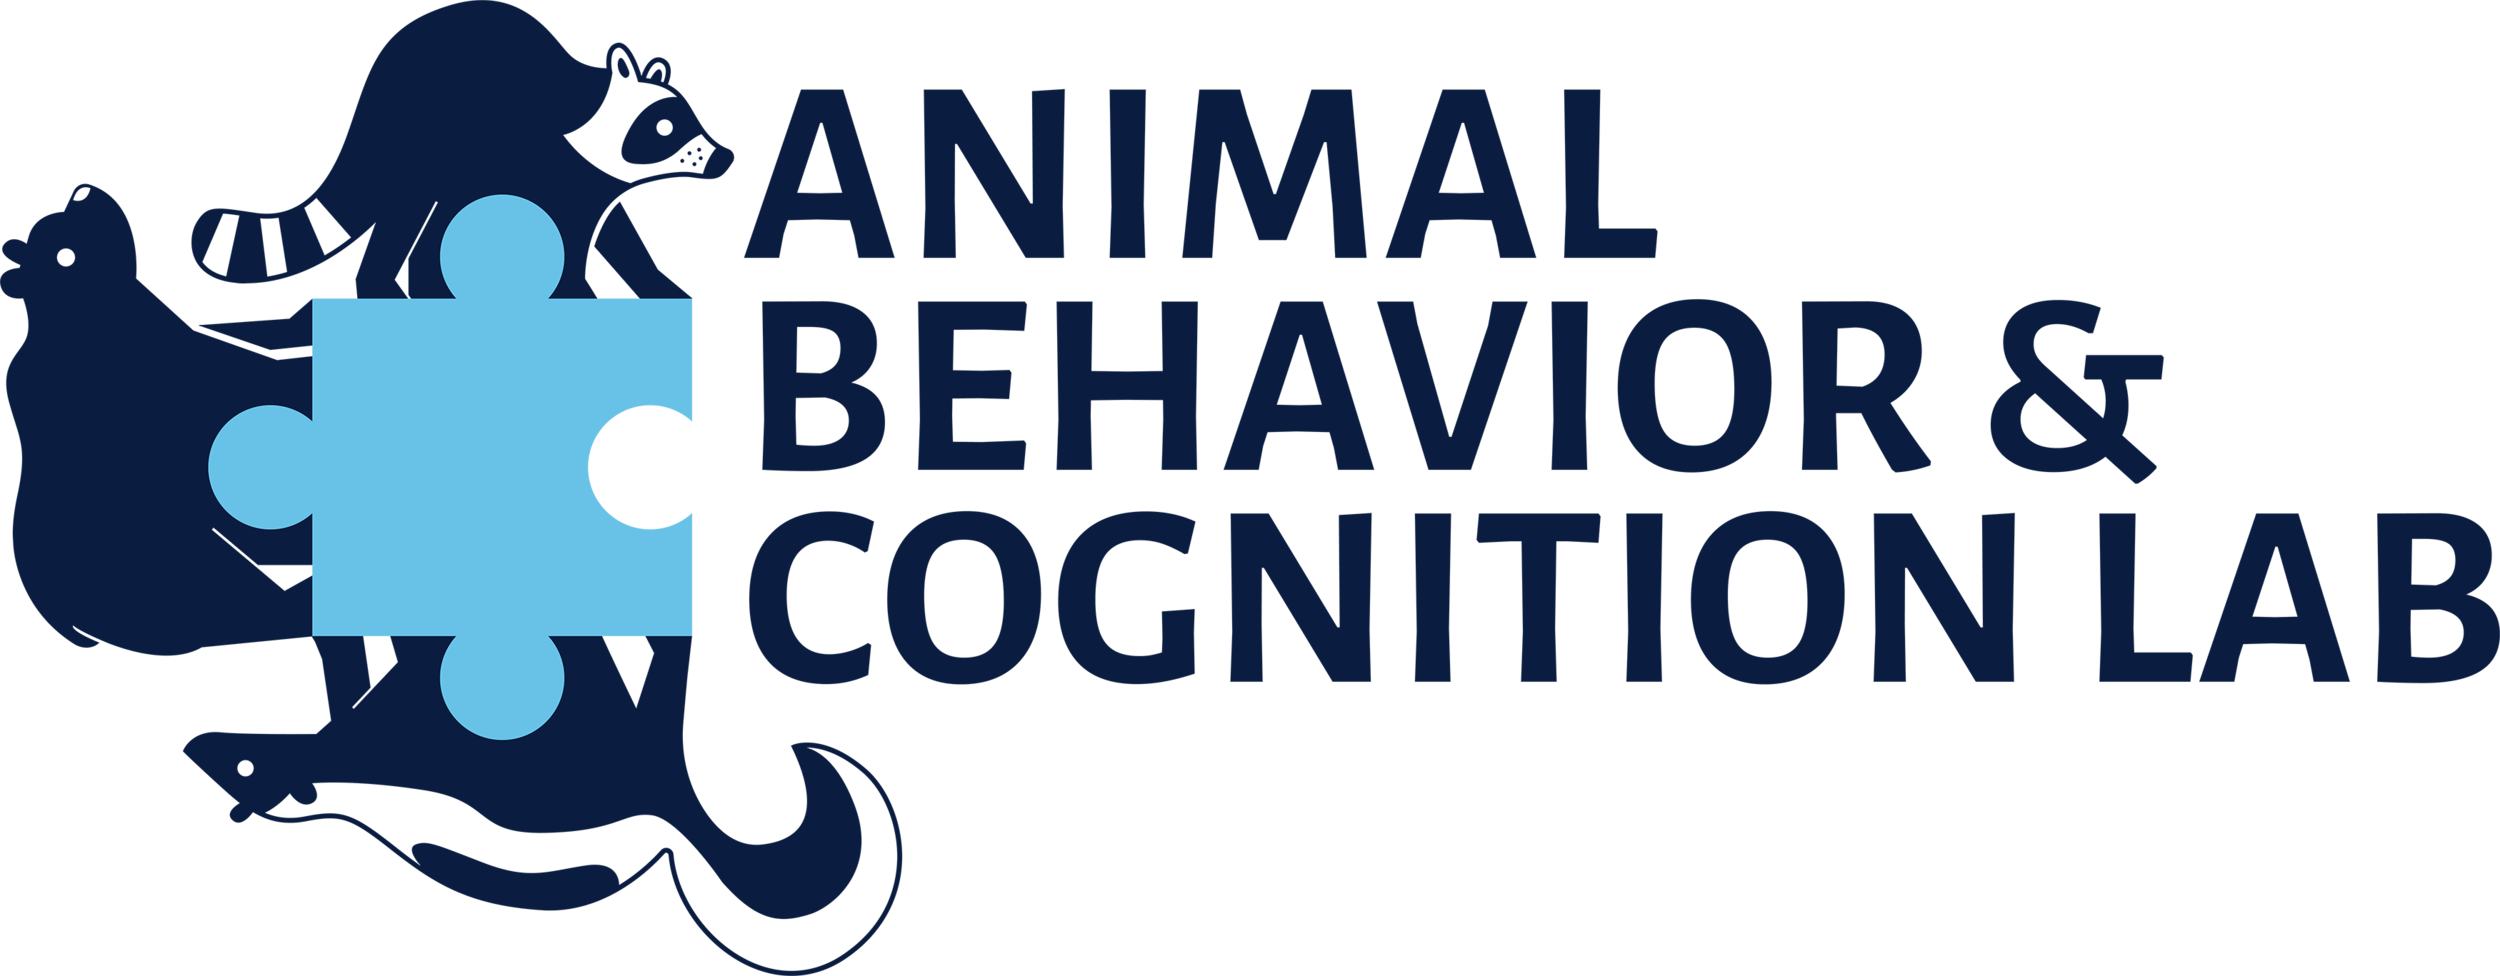 AnimalBehaviorCognitionLab-Logo_Horizontal_Color.png